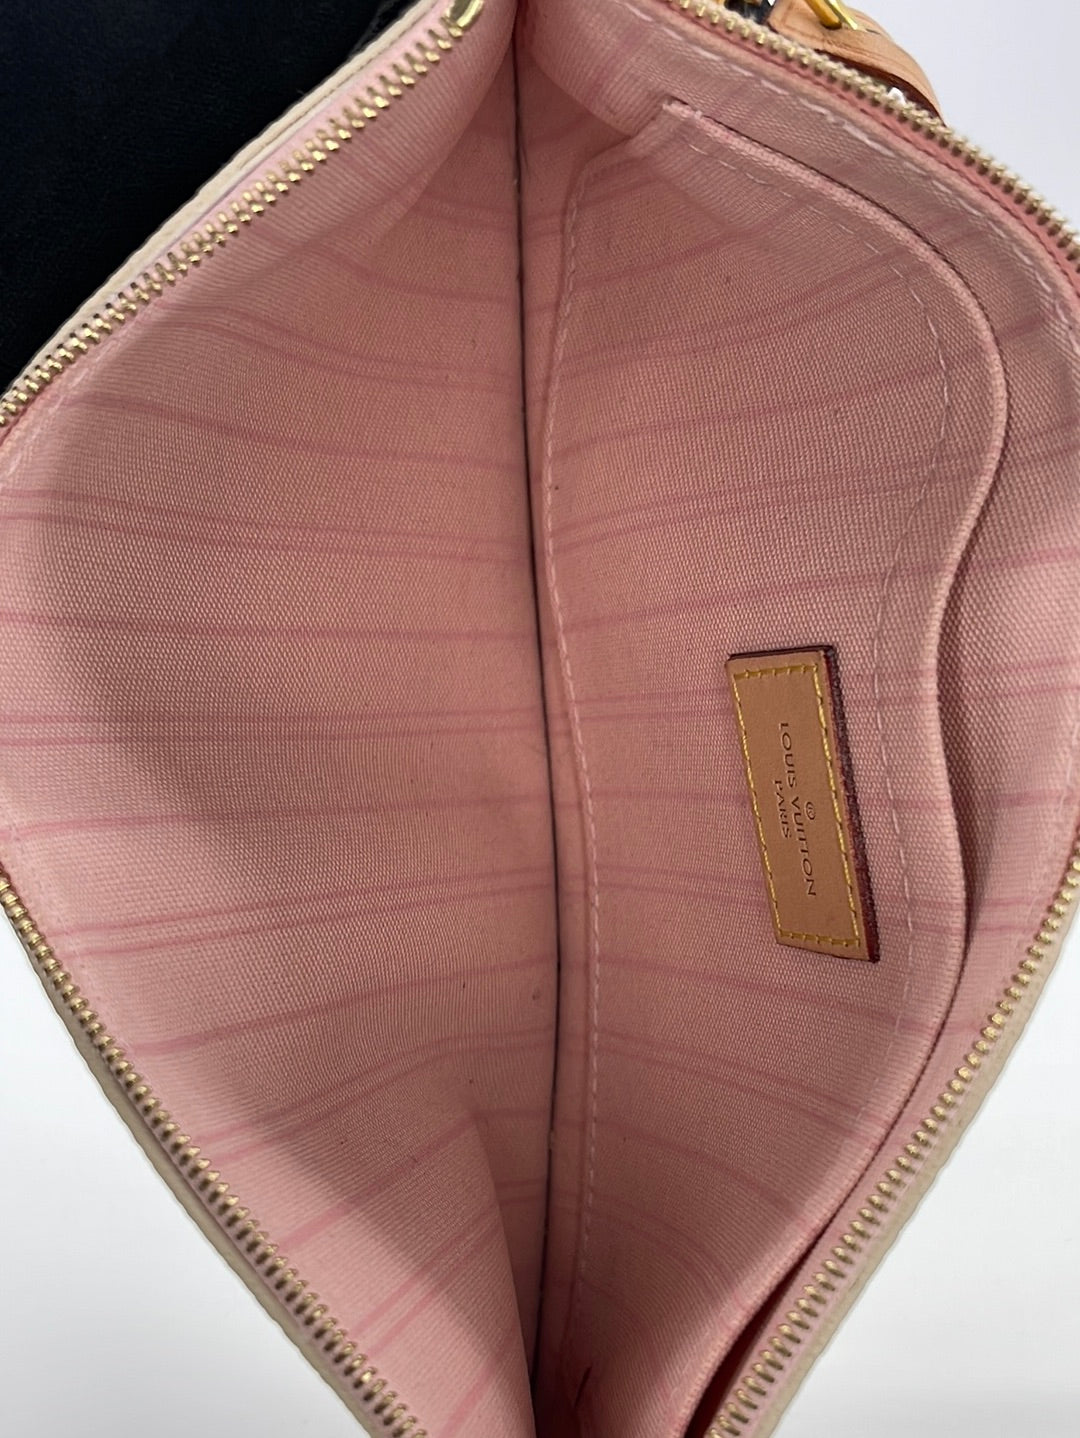 Louis Vuitton Favorite Azur - Bekas Second Preloved Original Authentic